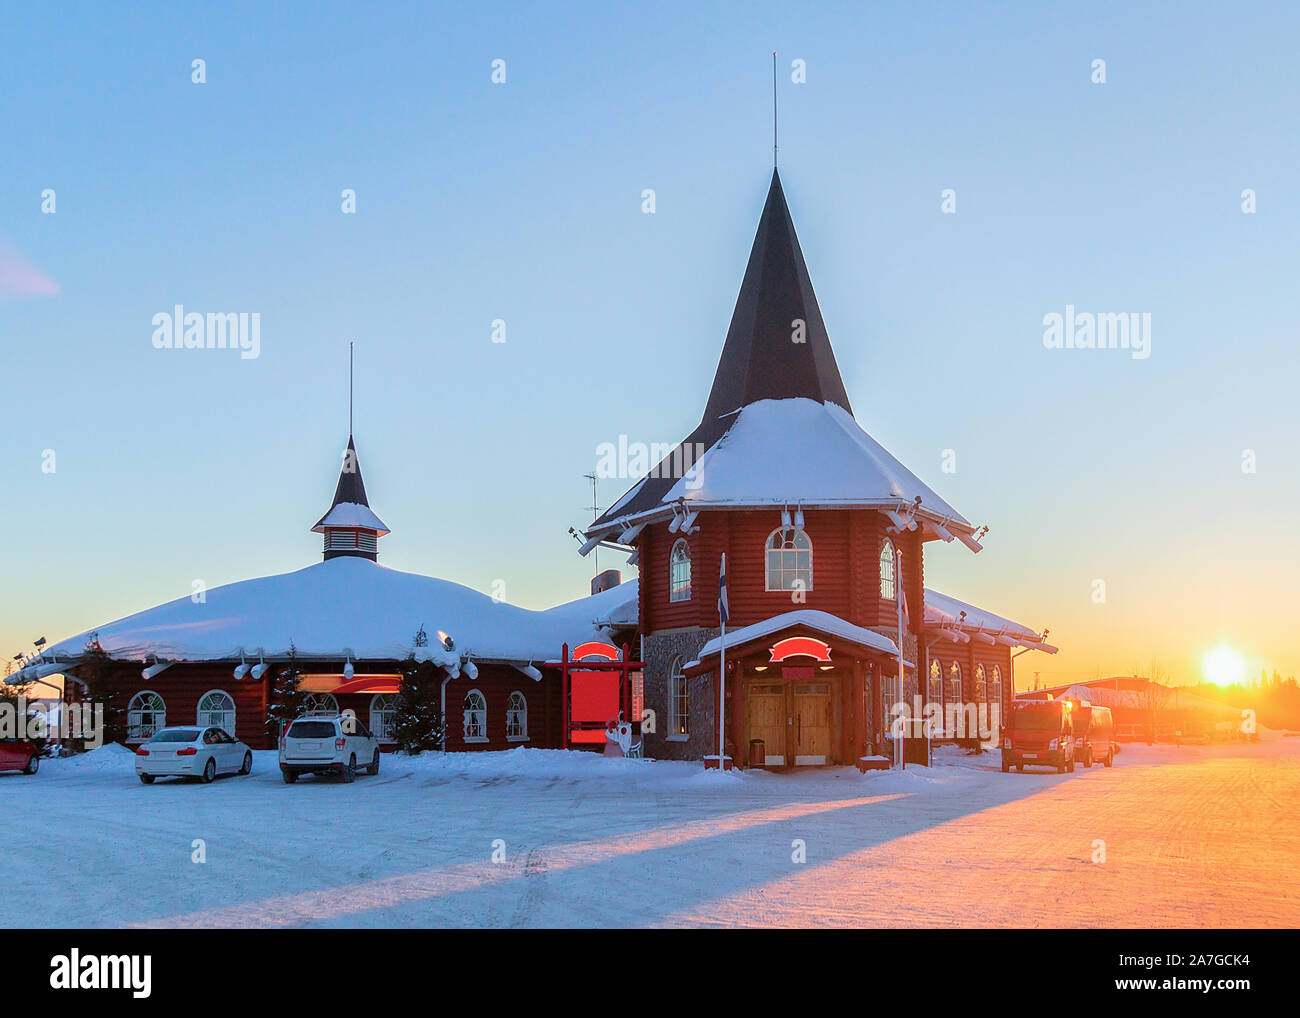 Reception at Santa Claus Holiday Village Lapland at sunset Stock Photo